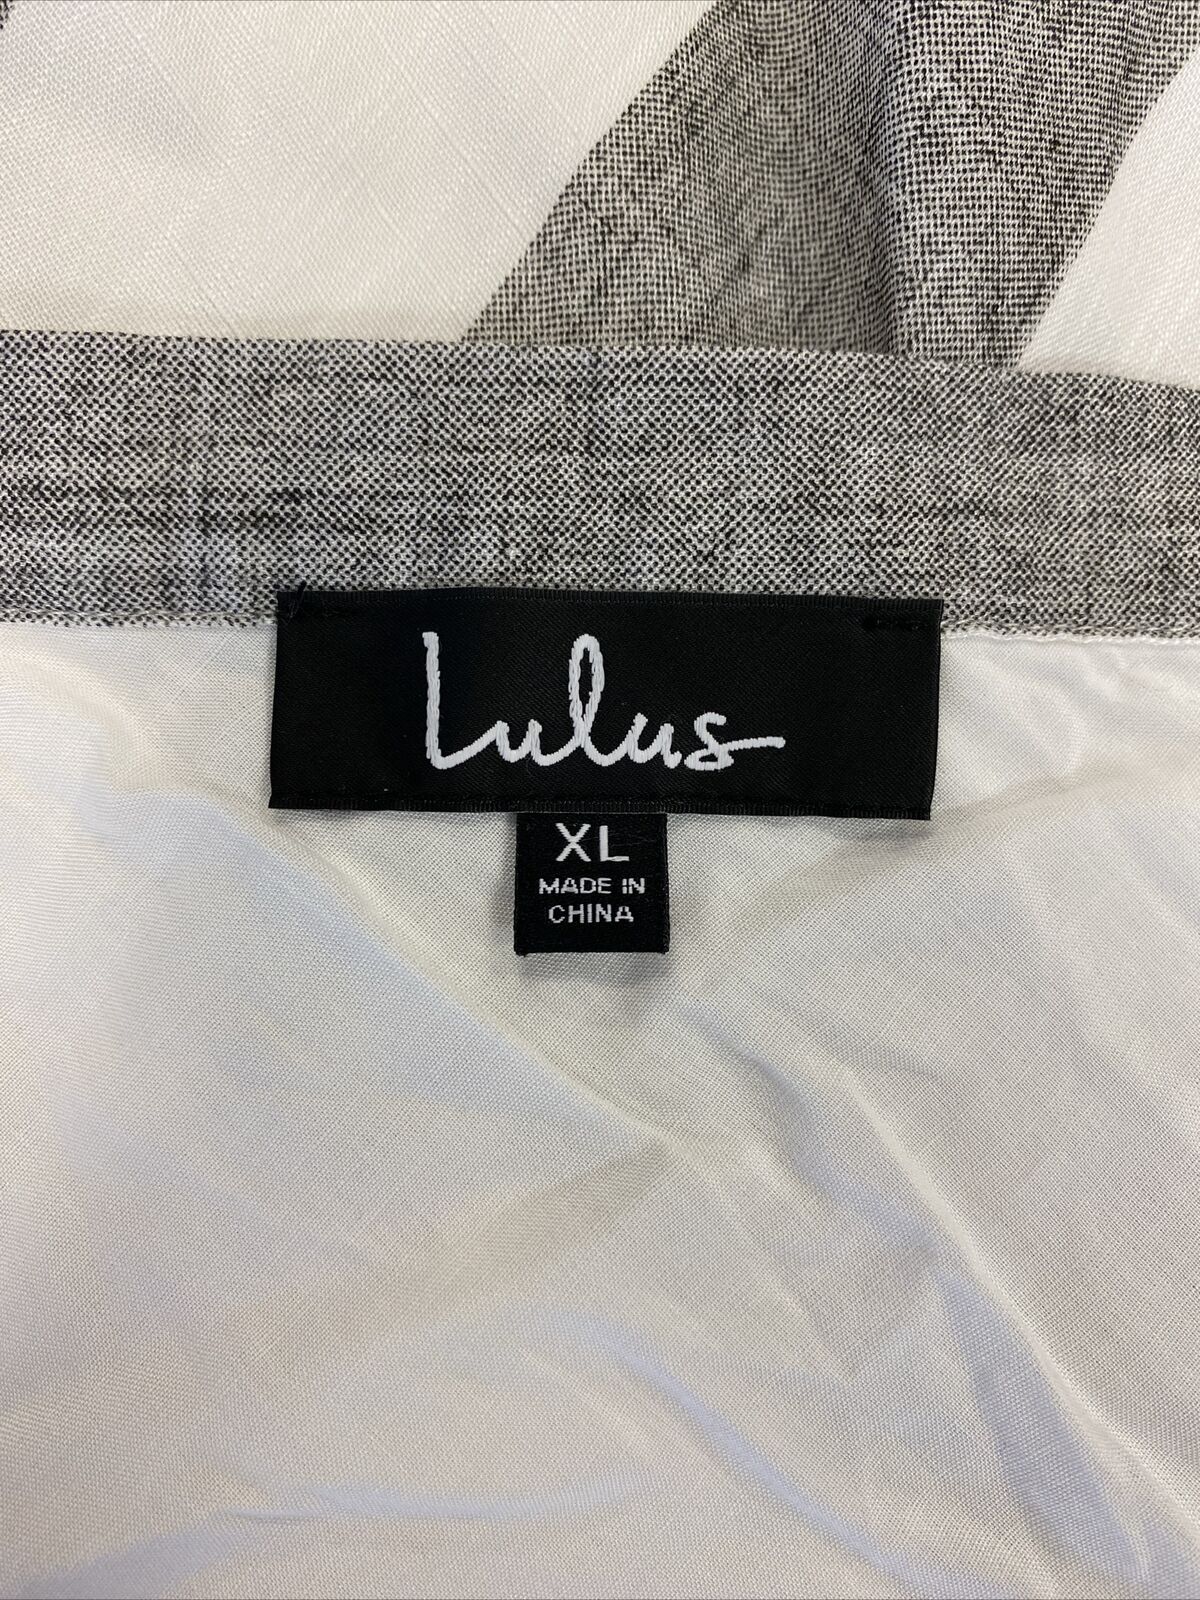 NEW Lulu's Women's White/Gray Striped Lined Wrap Skirt - XL